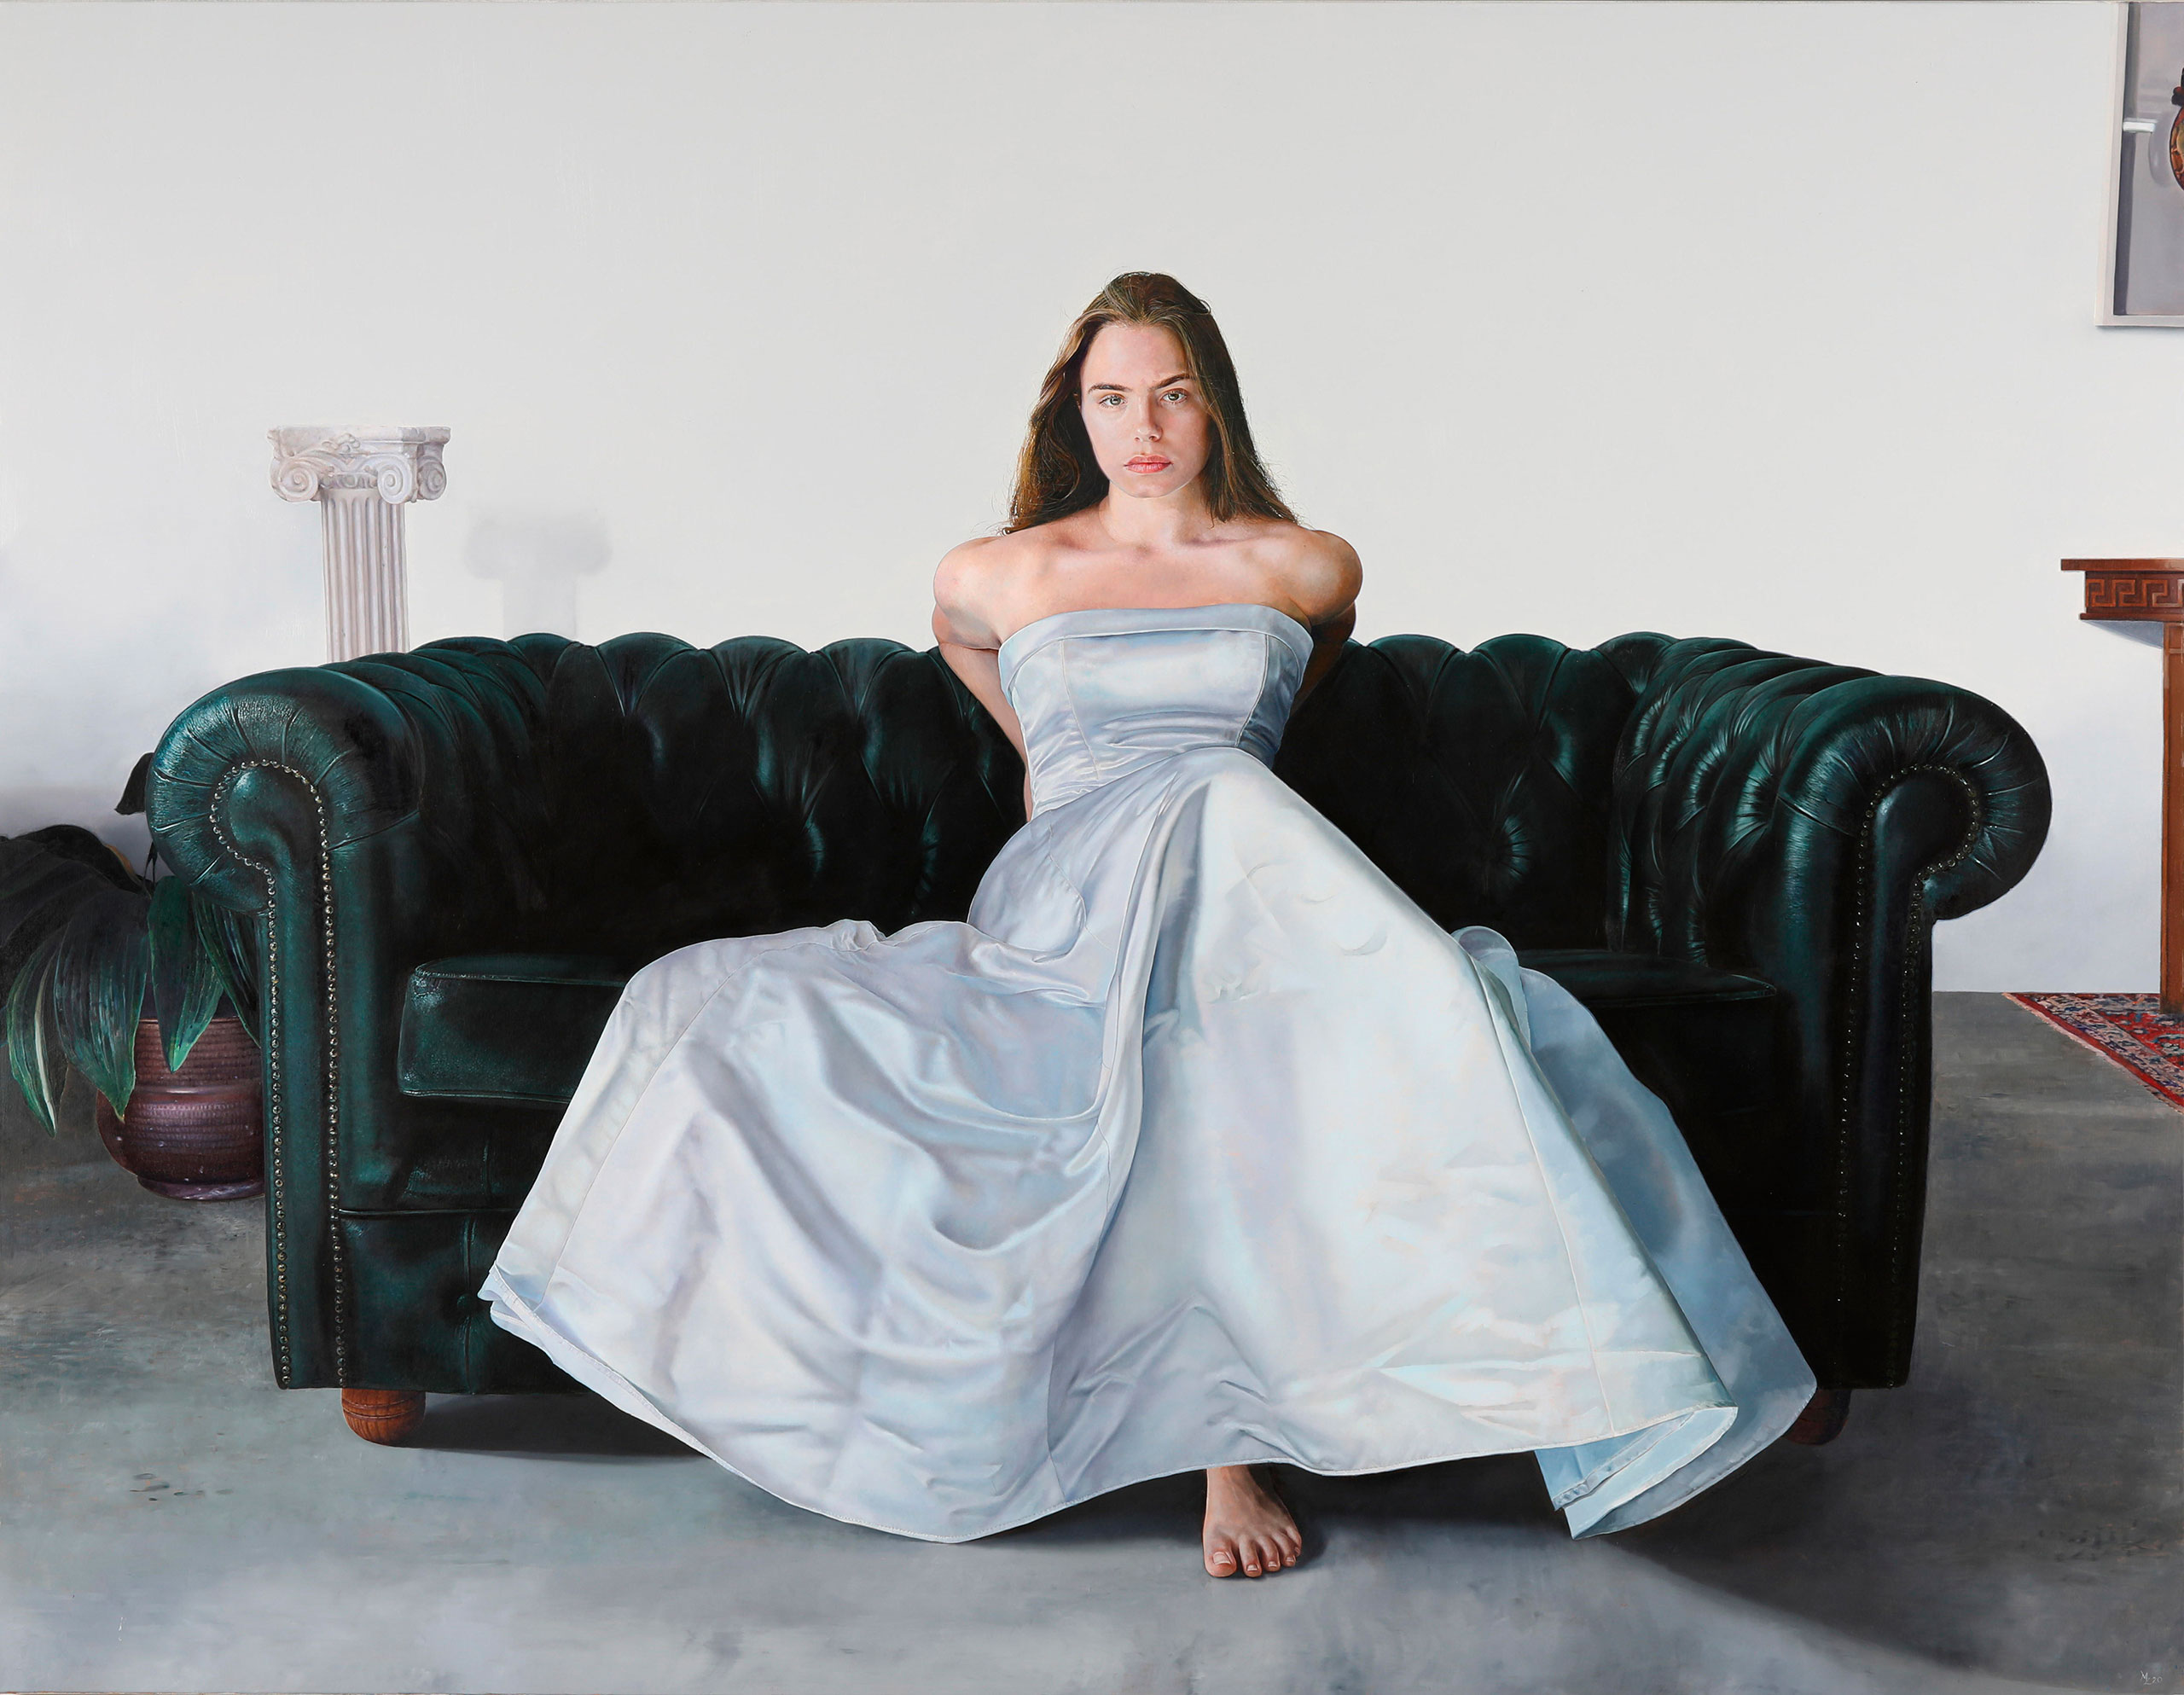 Michael Zavros, Mum’s wedding dress, 2021. Oil on canvas. 160 x 205cm. Courtesy of the artist. © Michael Zavros 